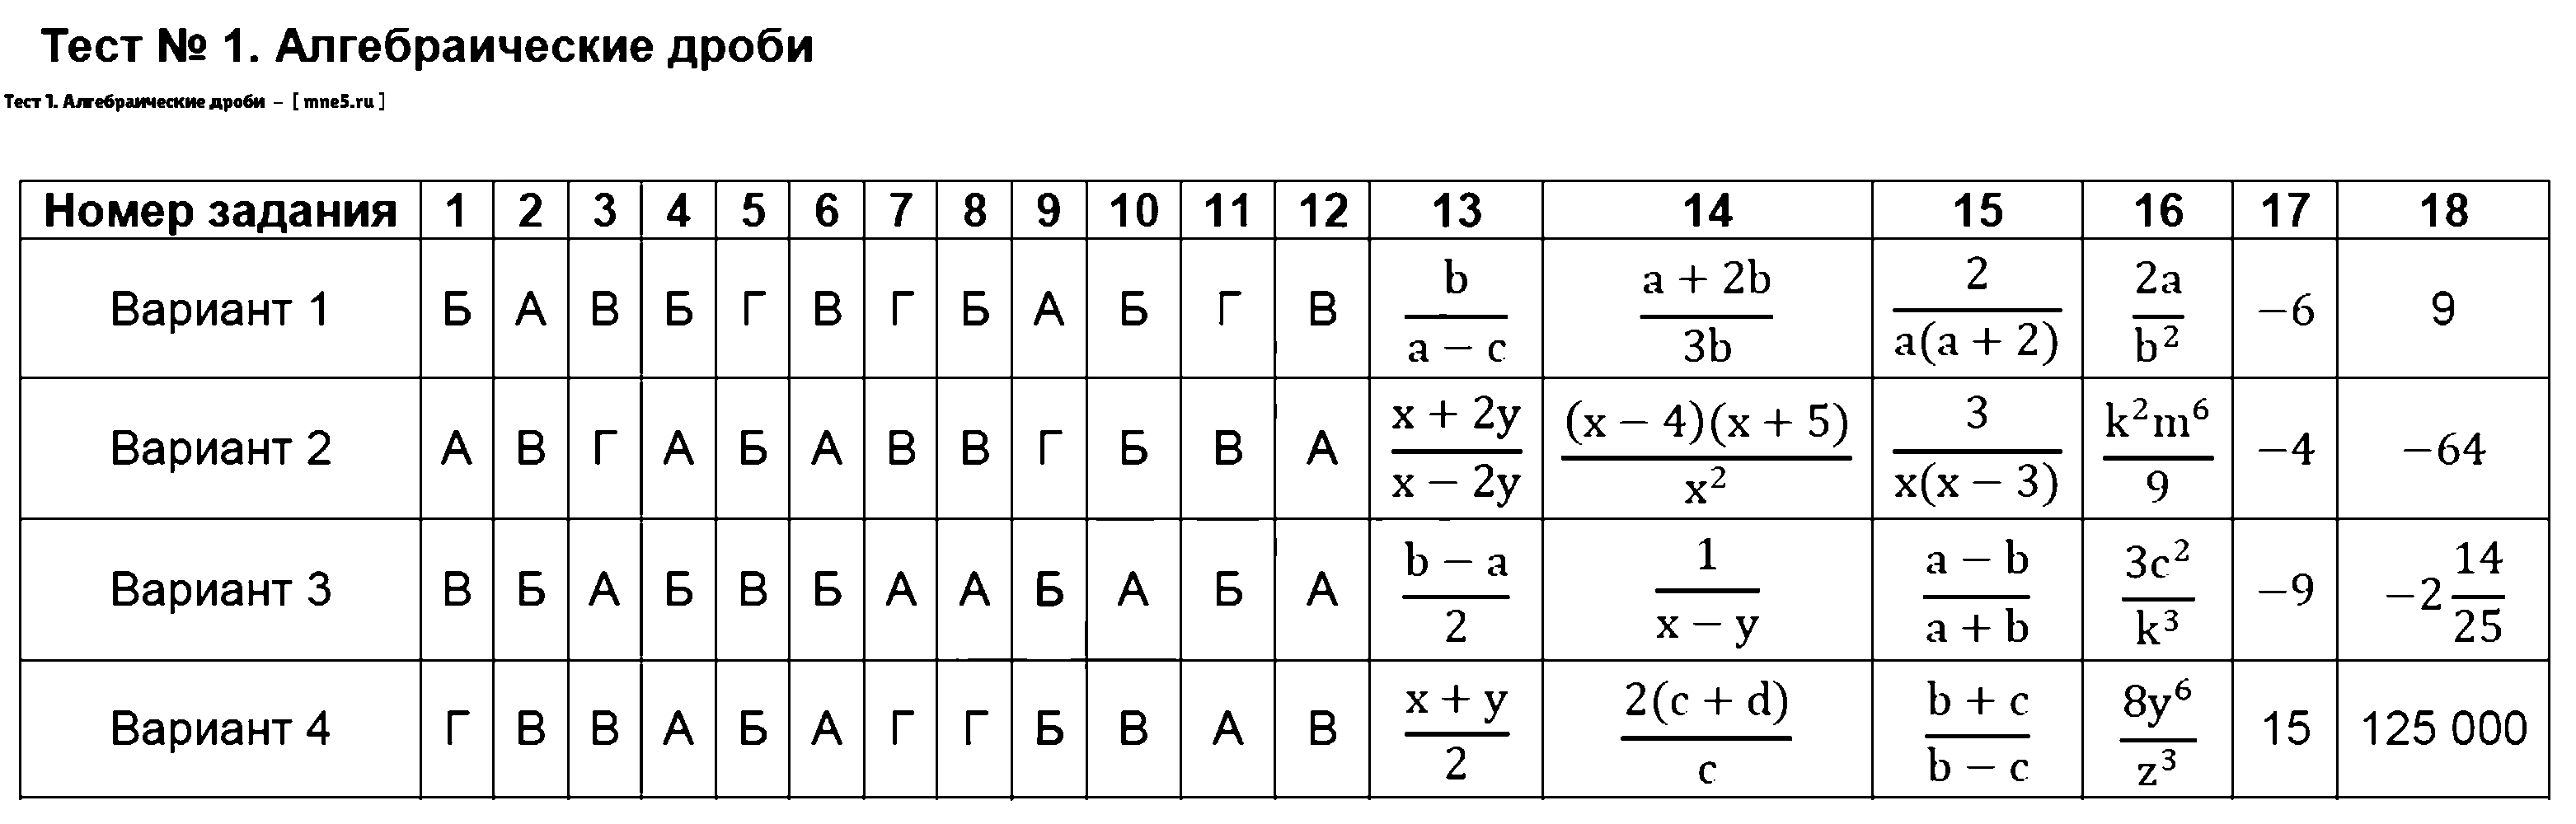 ГДЗ Алгебра 8 класс - Тест 1. Алгебраические дроби